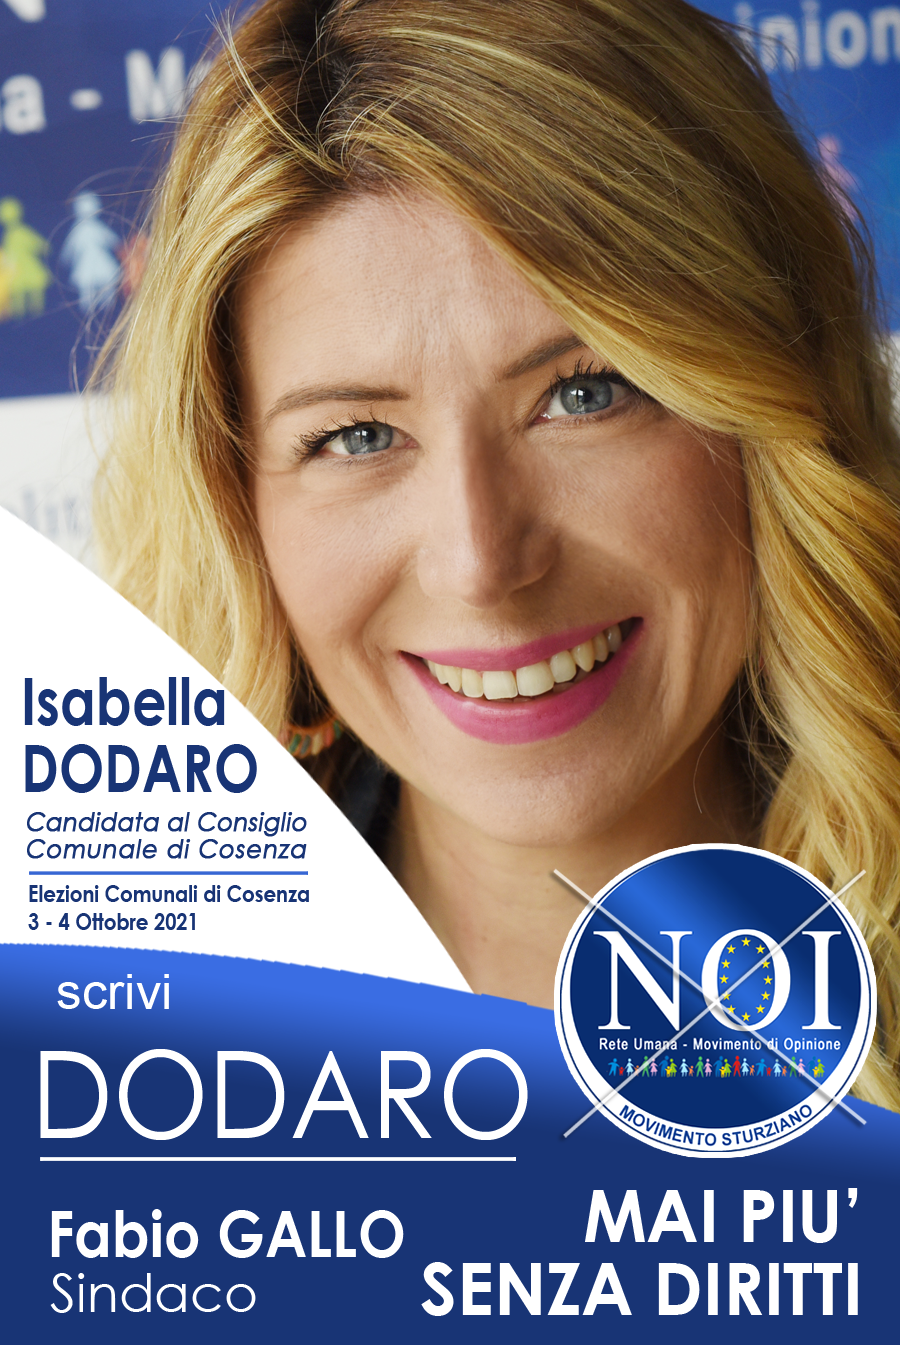 Isabella Dodaro